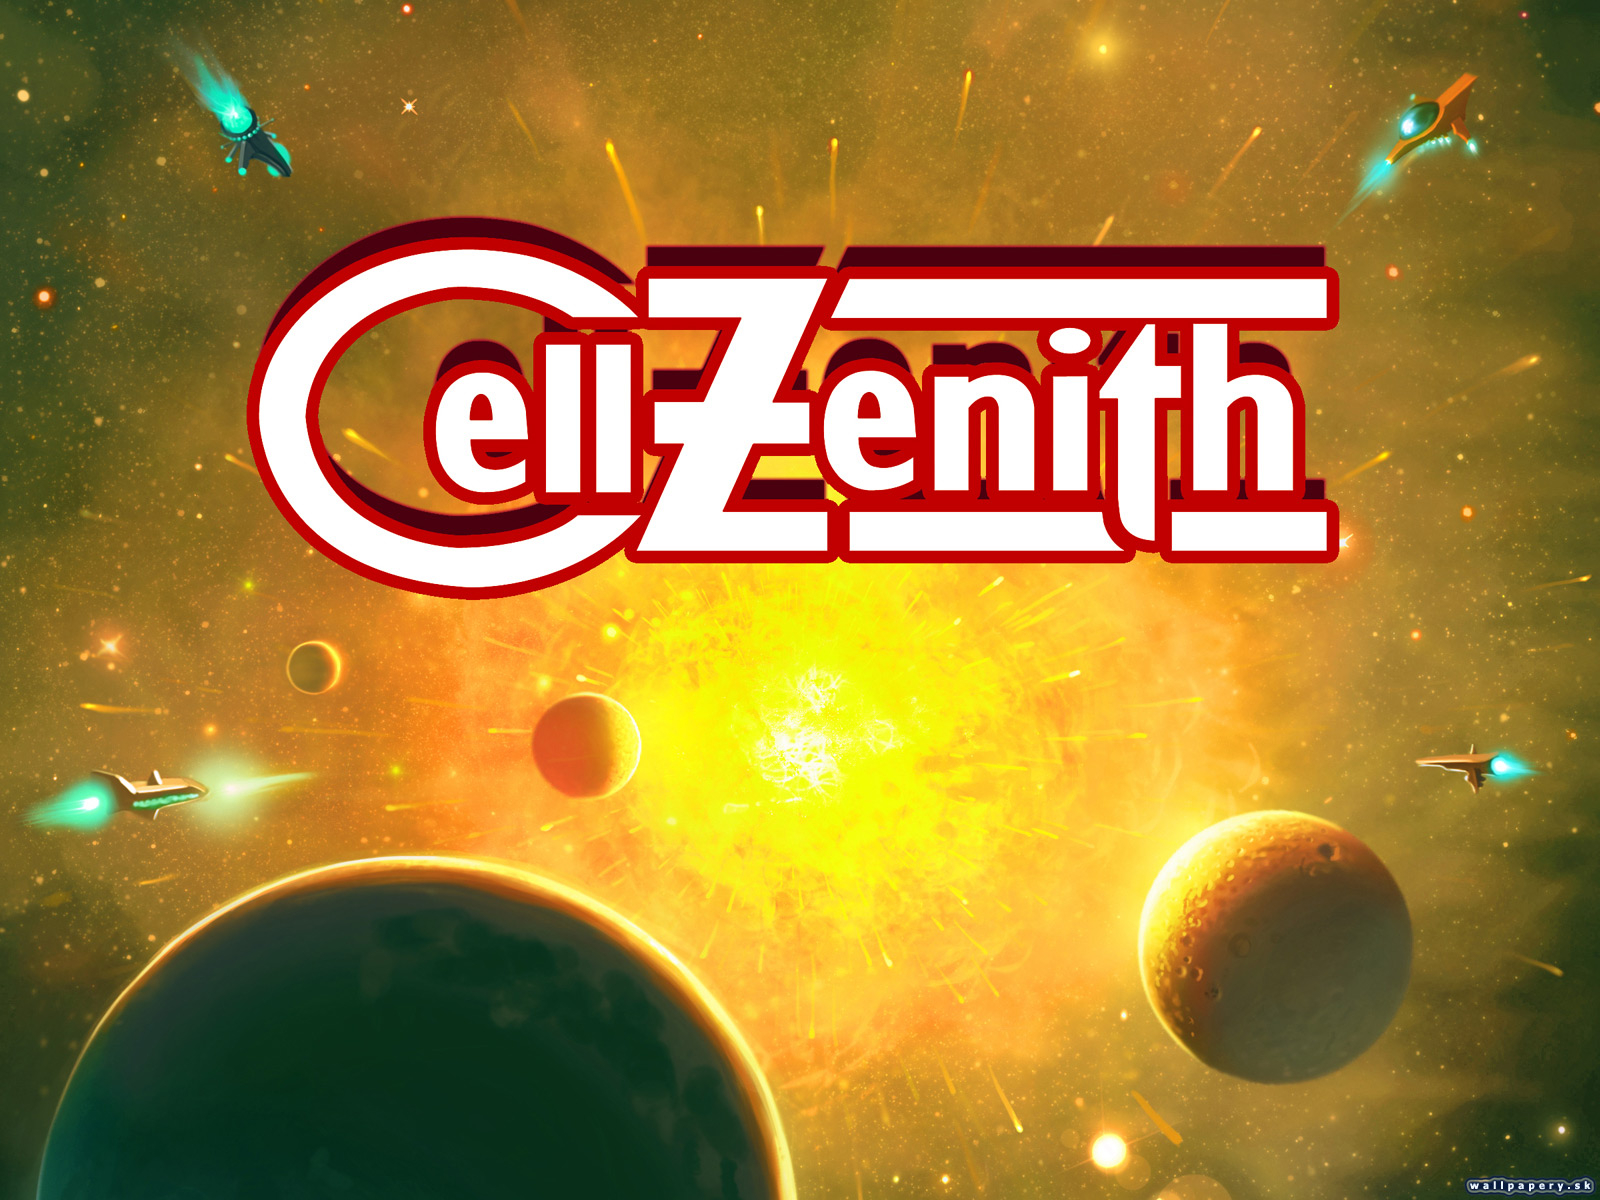 CellZenith - wallpaper 2